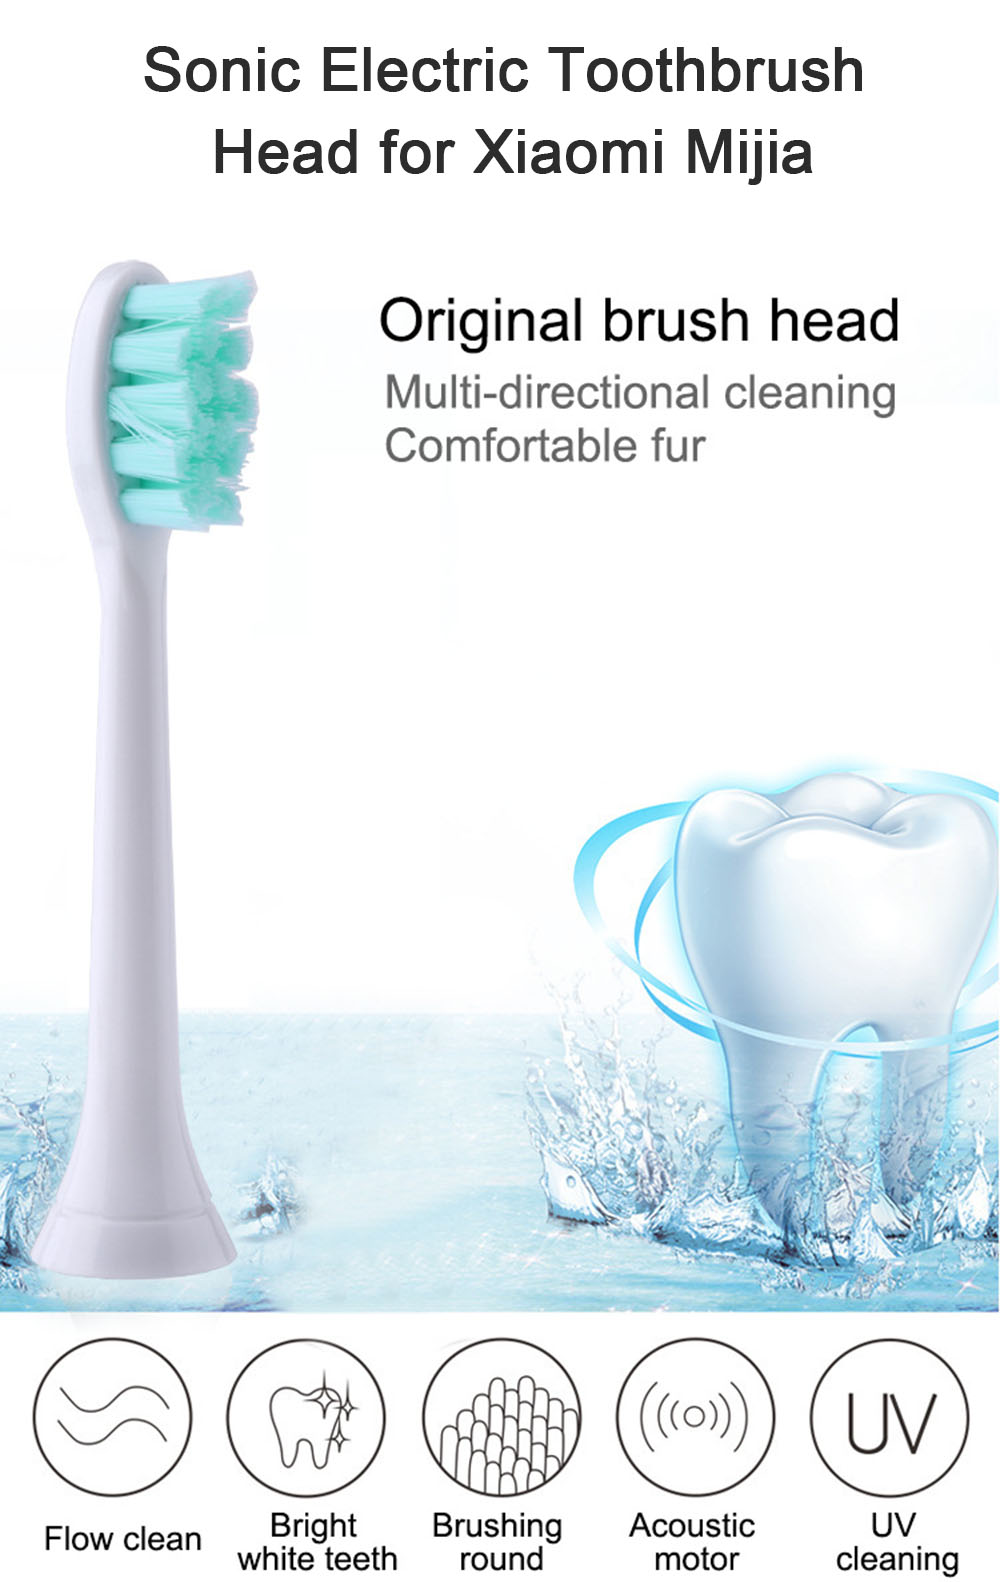 Sonic Electric Toothbrush Head for Xiaomi Mijia